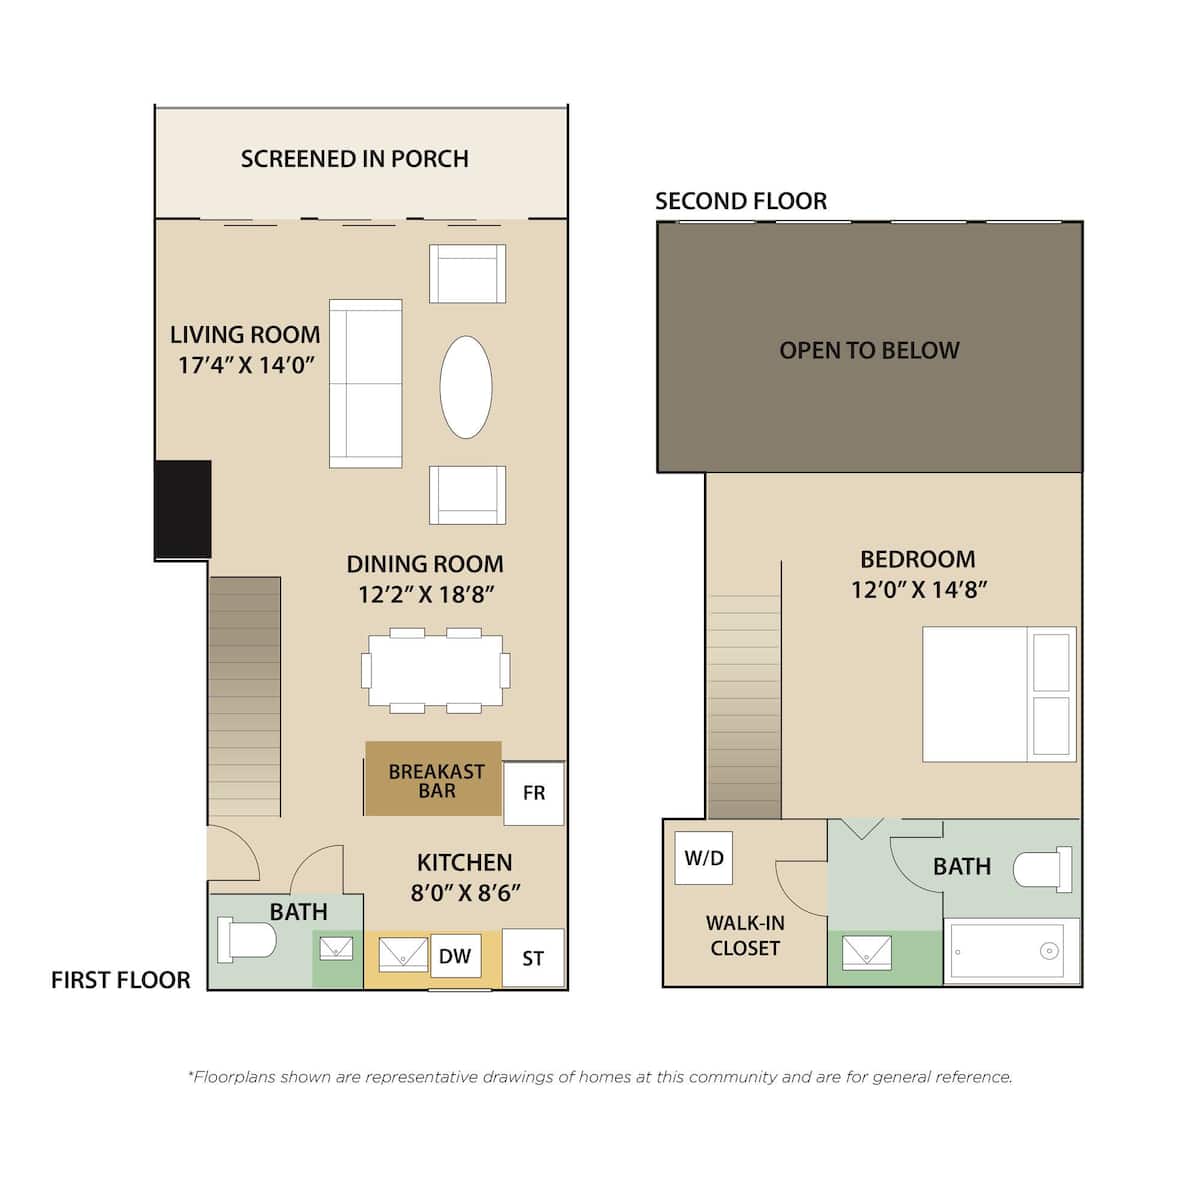 Floorplan diagram for Monte Larco Townhouse, showing 1 bedroom